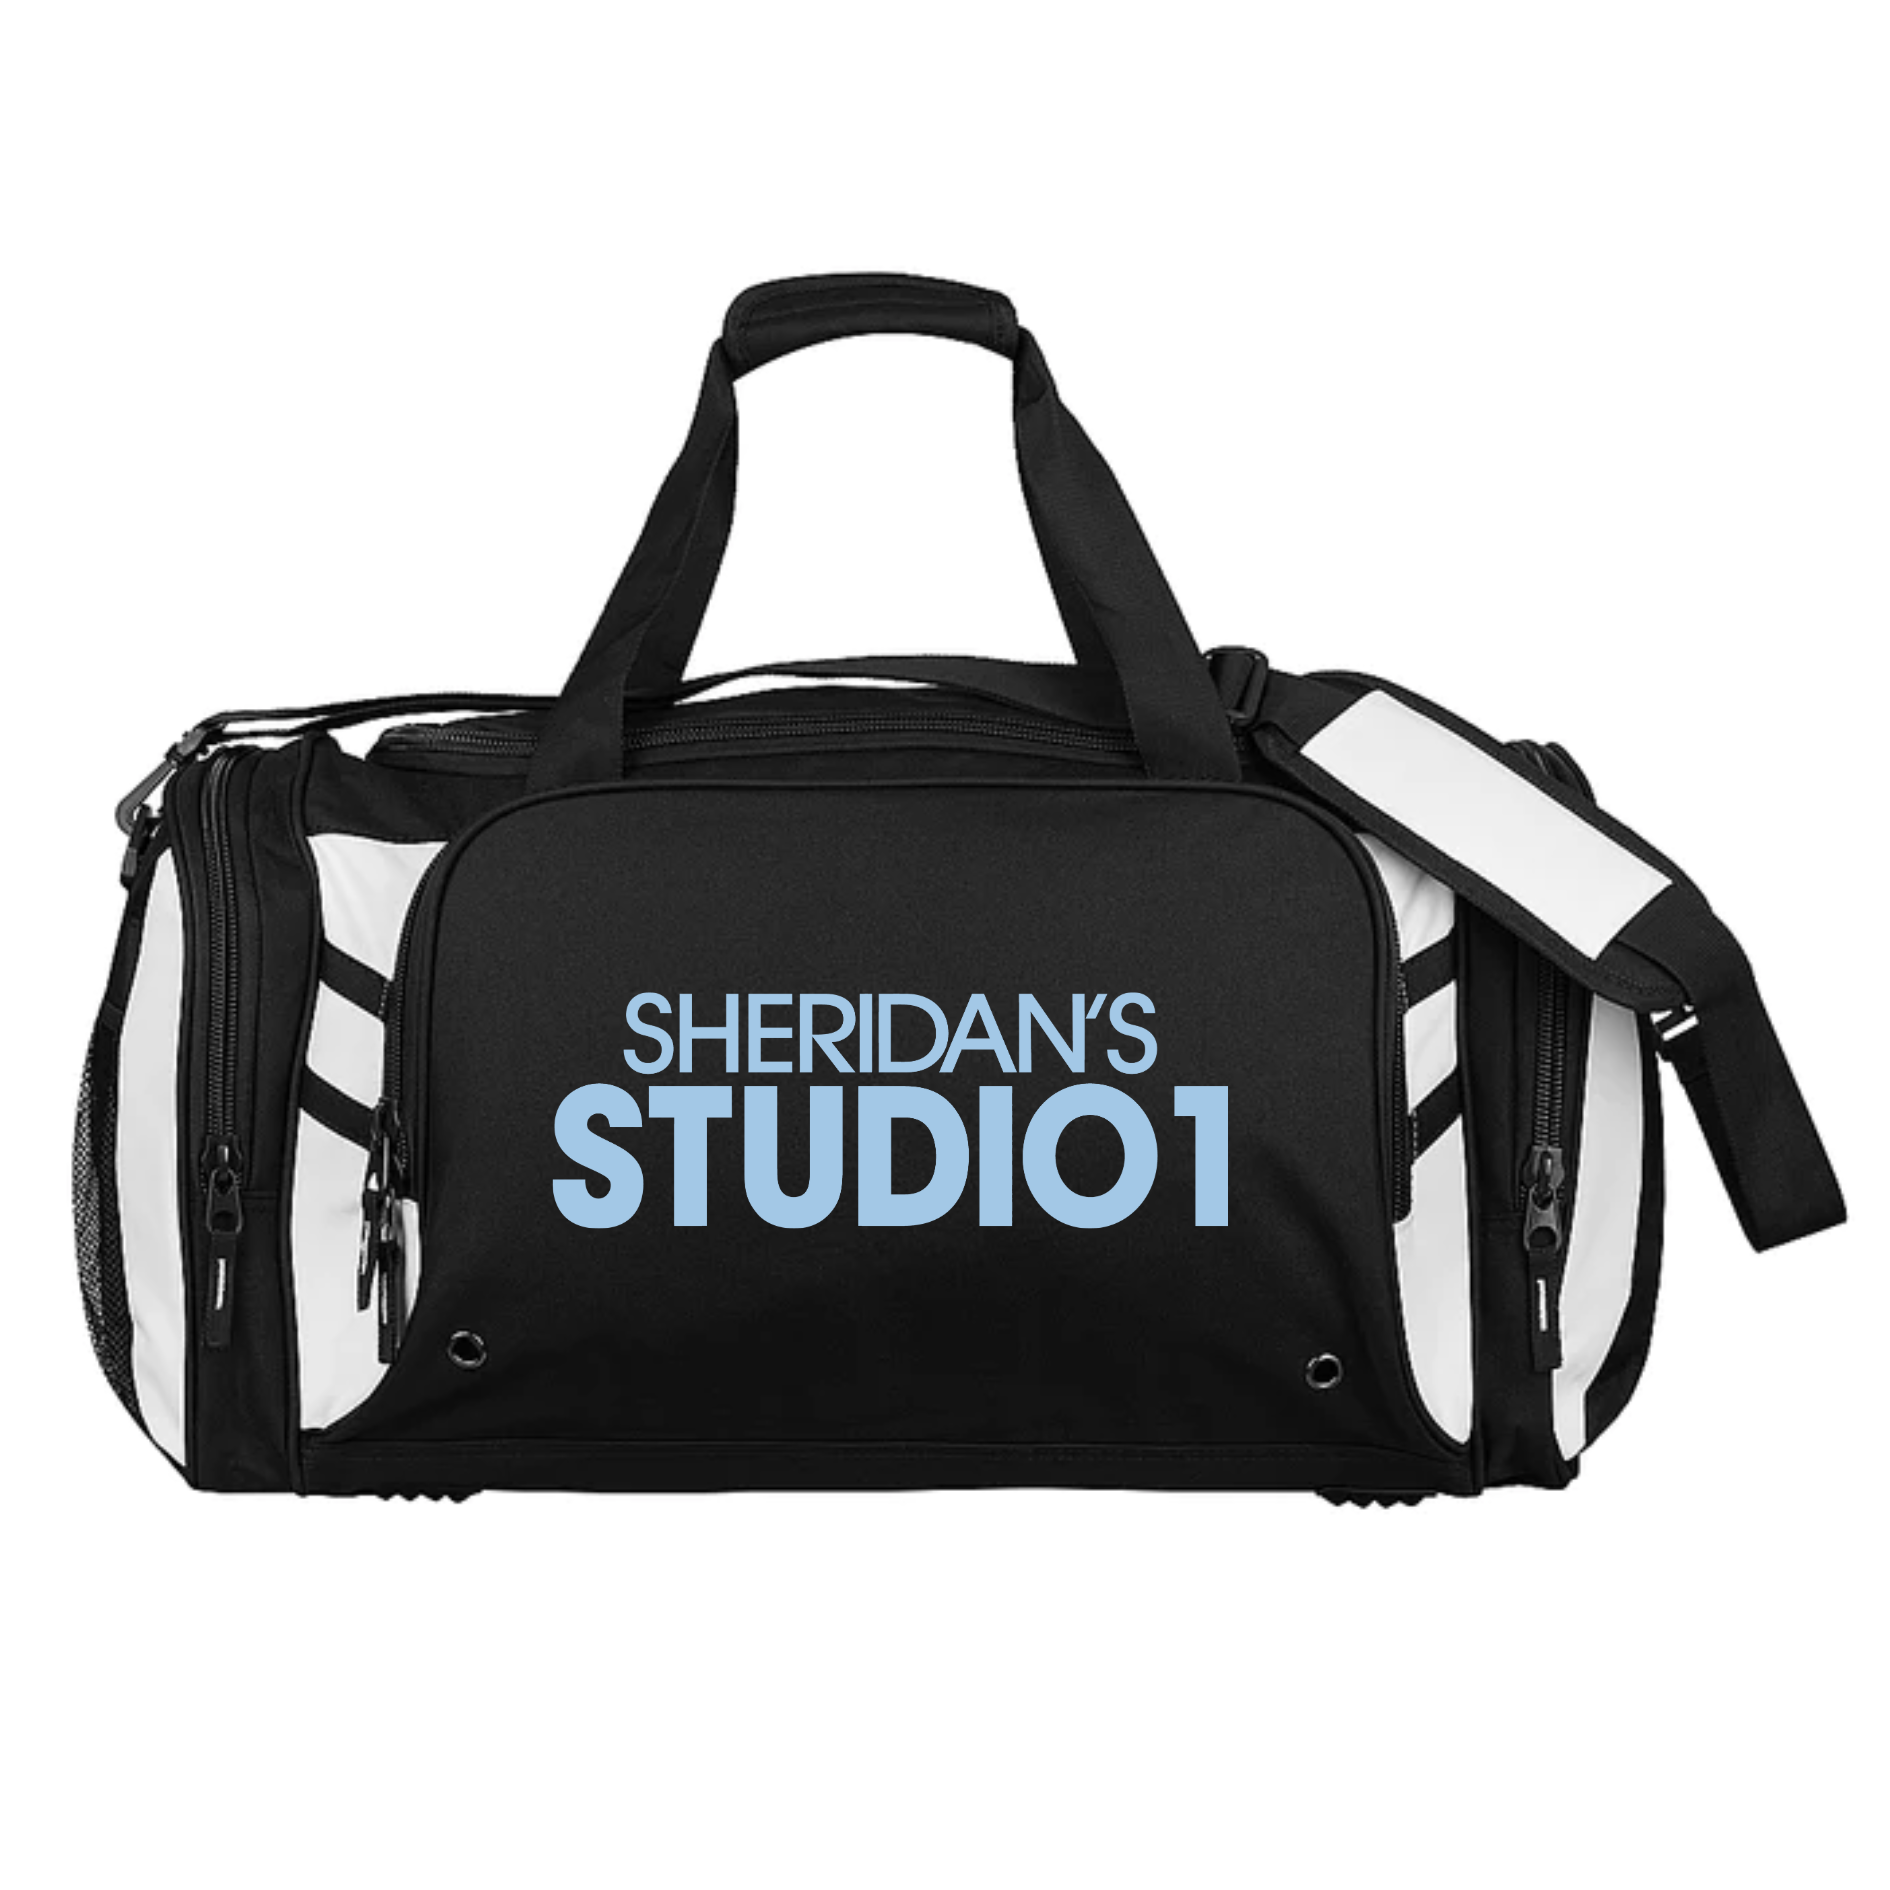 Sheridan's Studio Duffle Bag